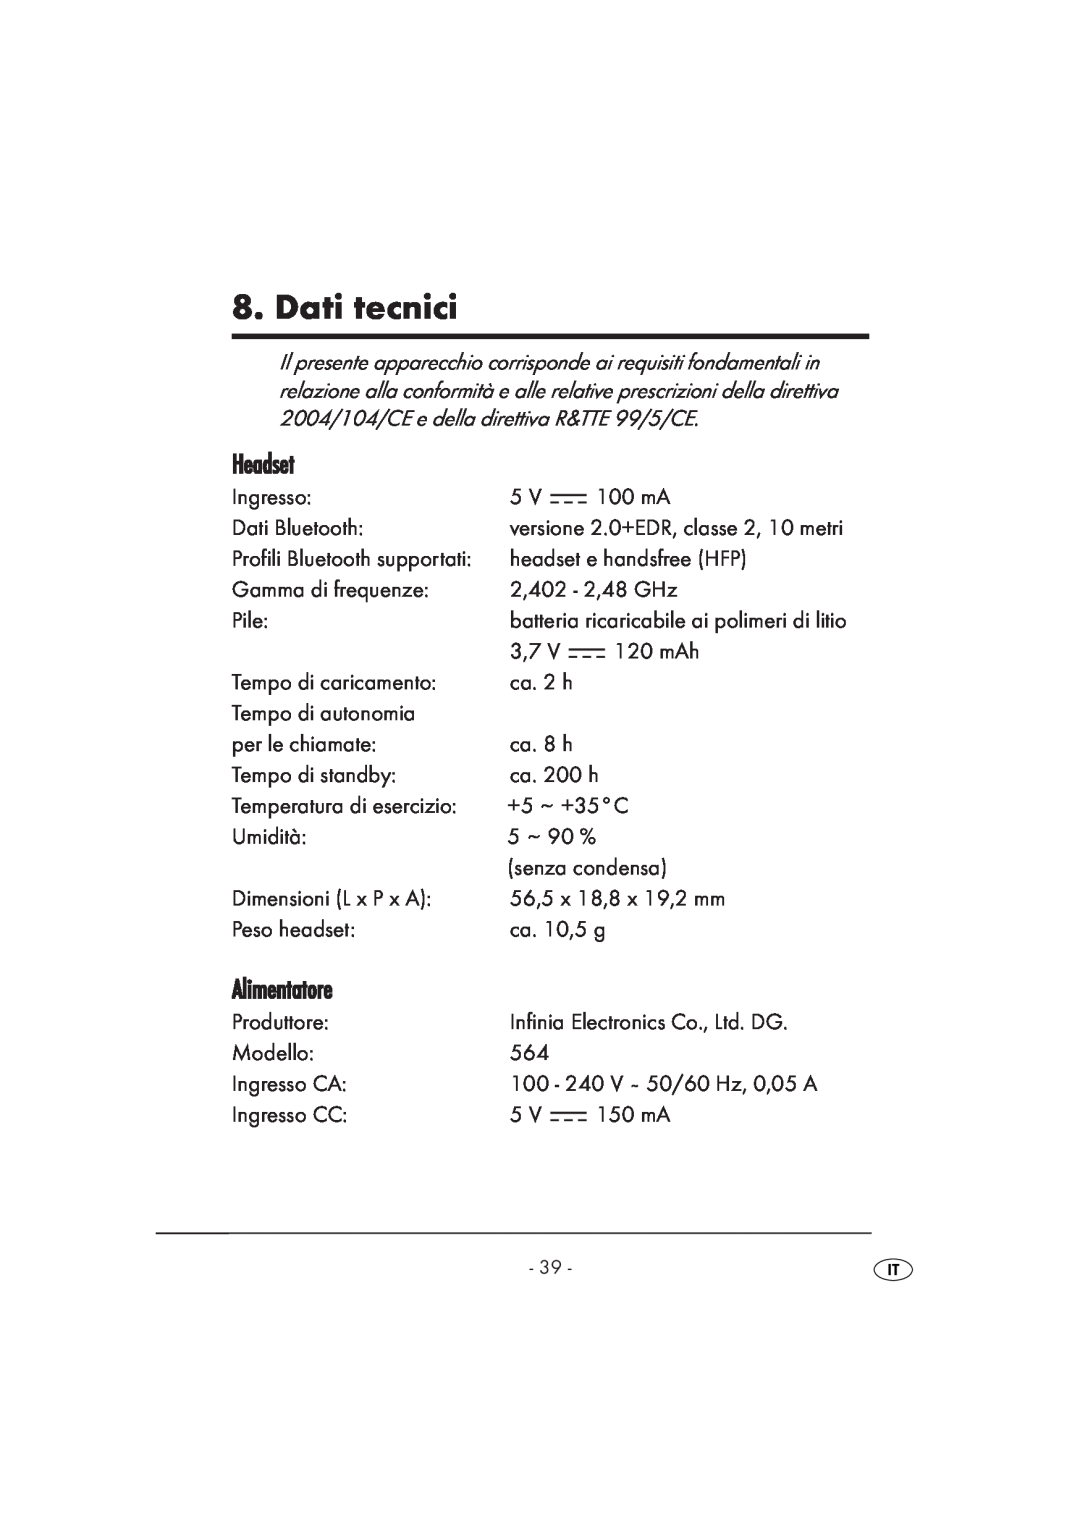 Kompernass KH 2356 manual Dati tecnici, Headset, Alimentatore 